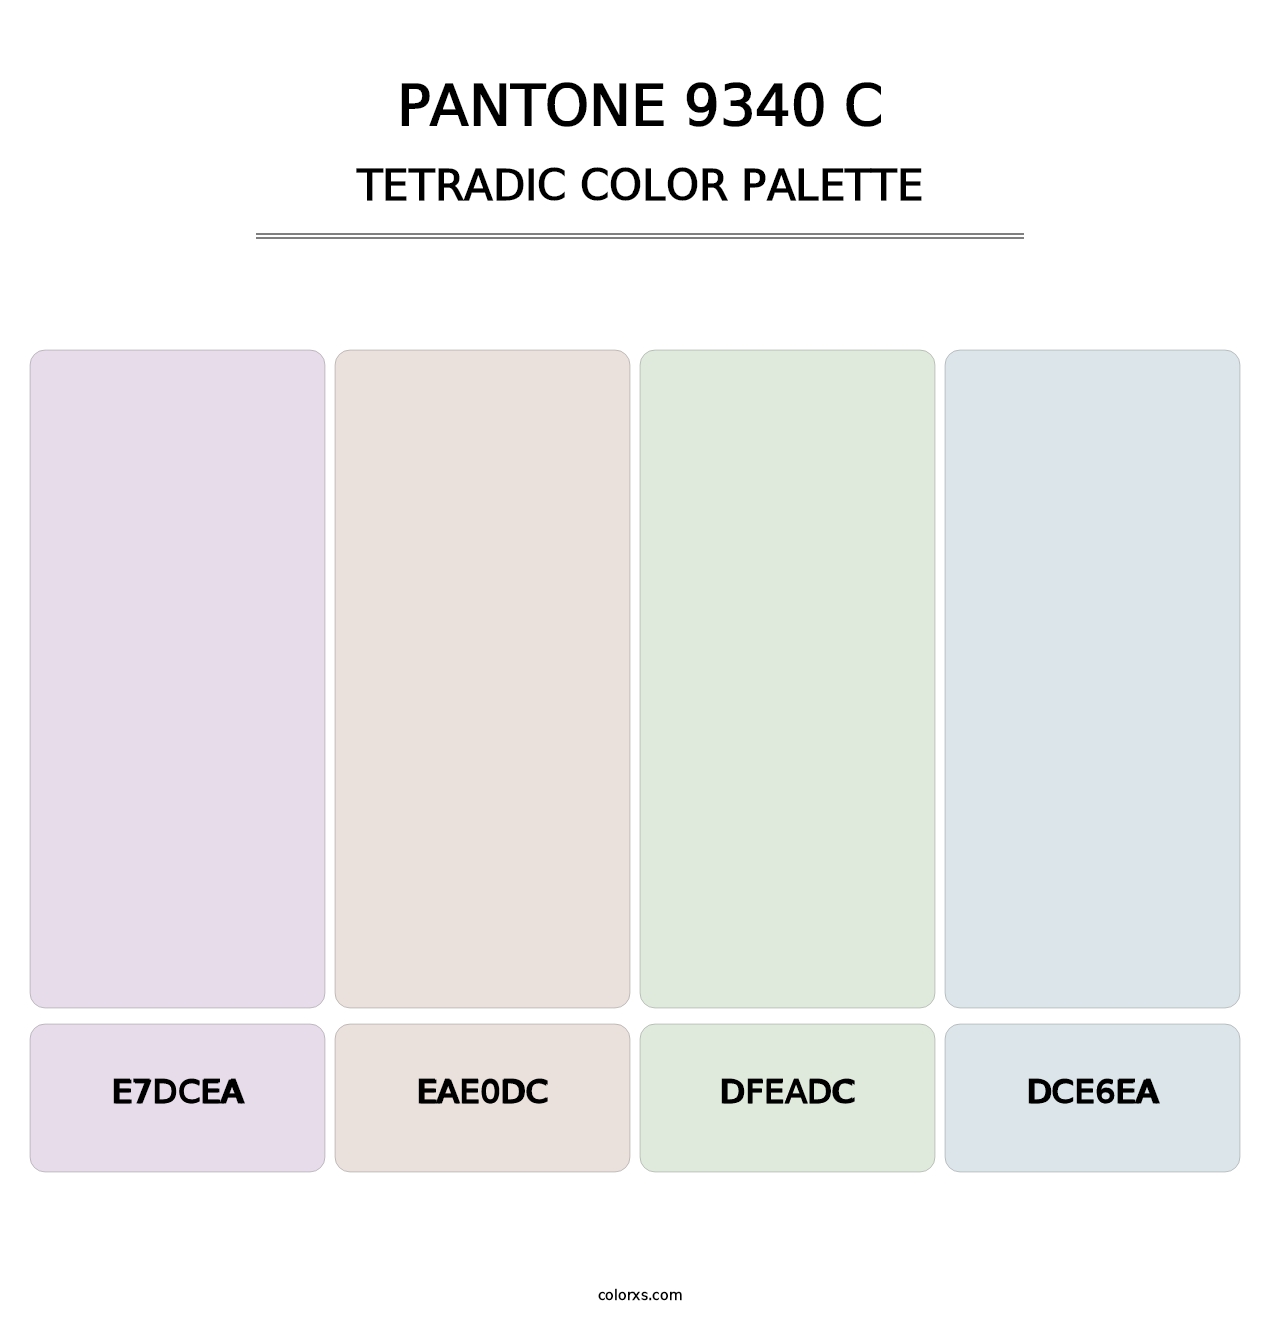 PANTONE 9340 C - Tetradic Color Palette